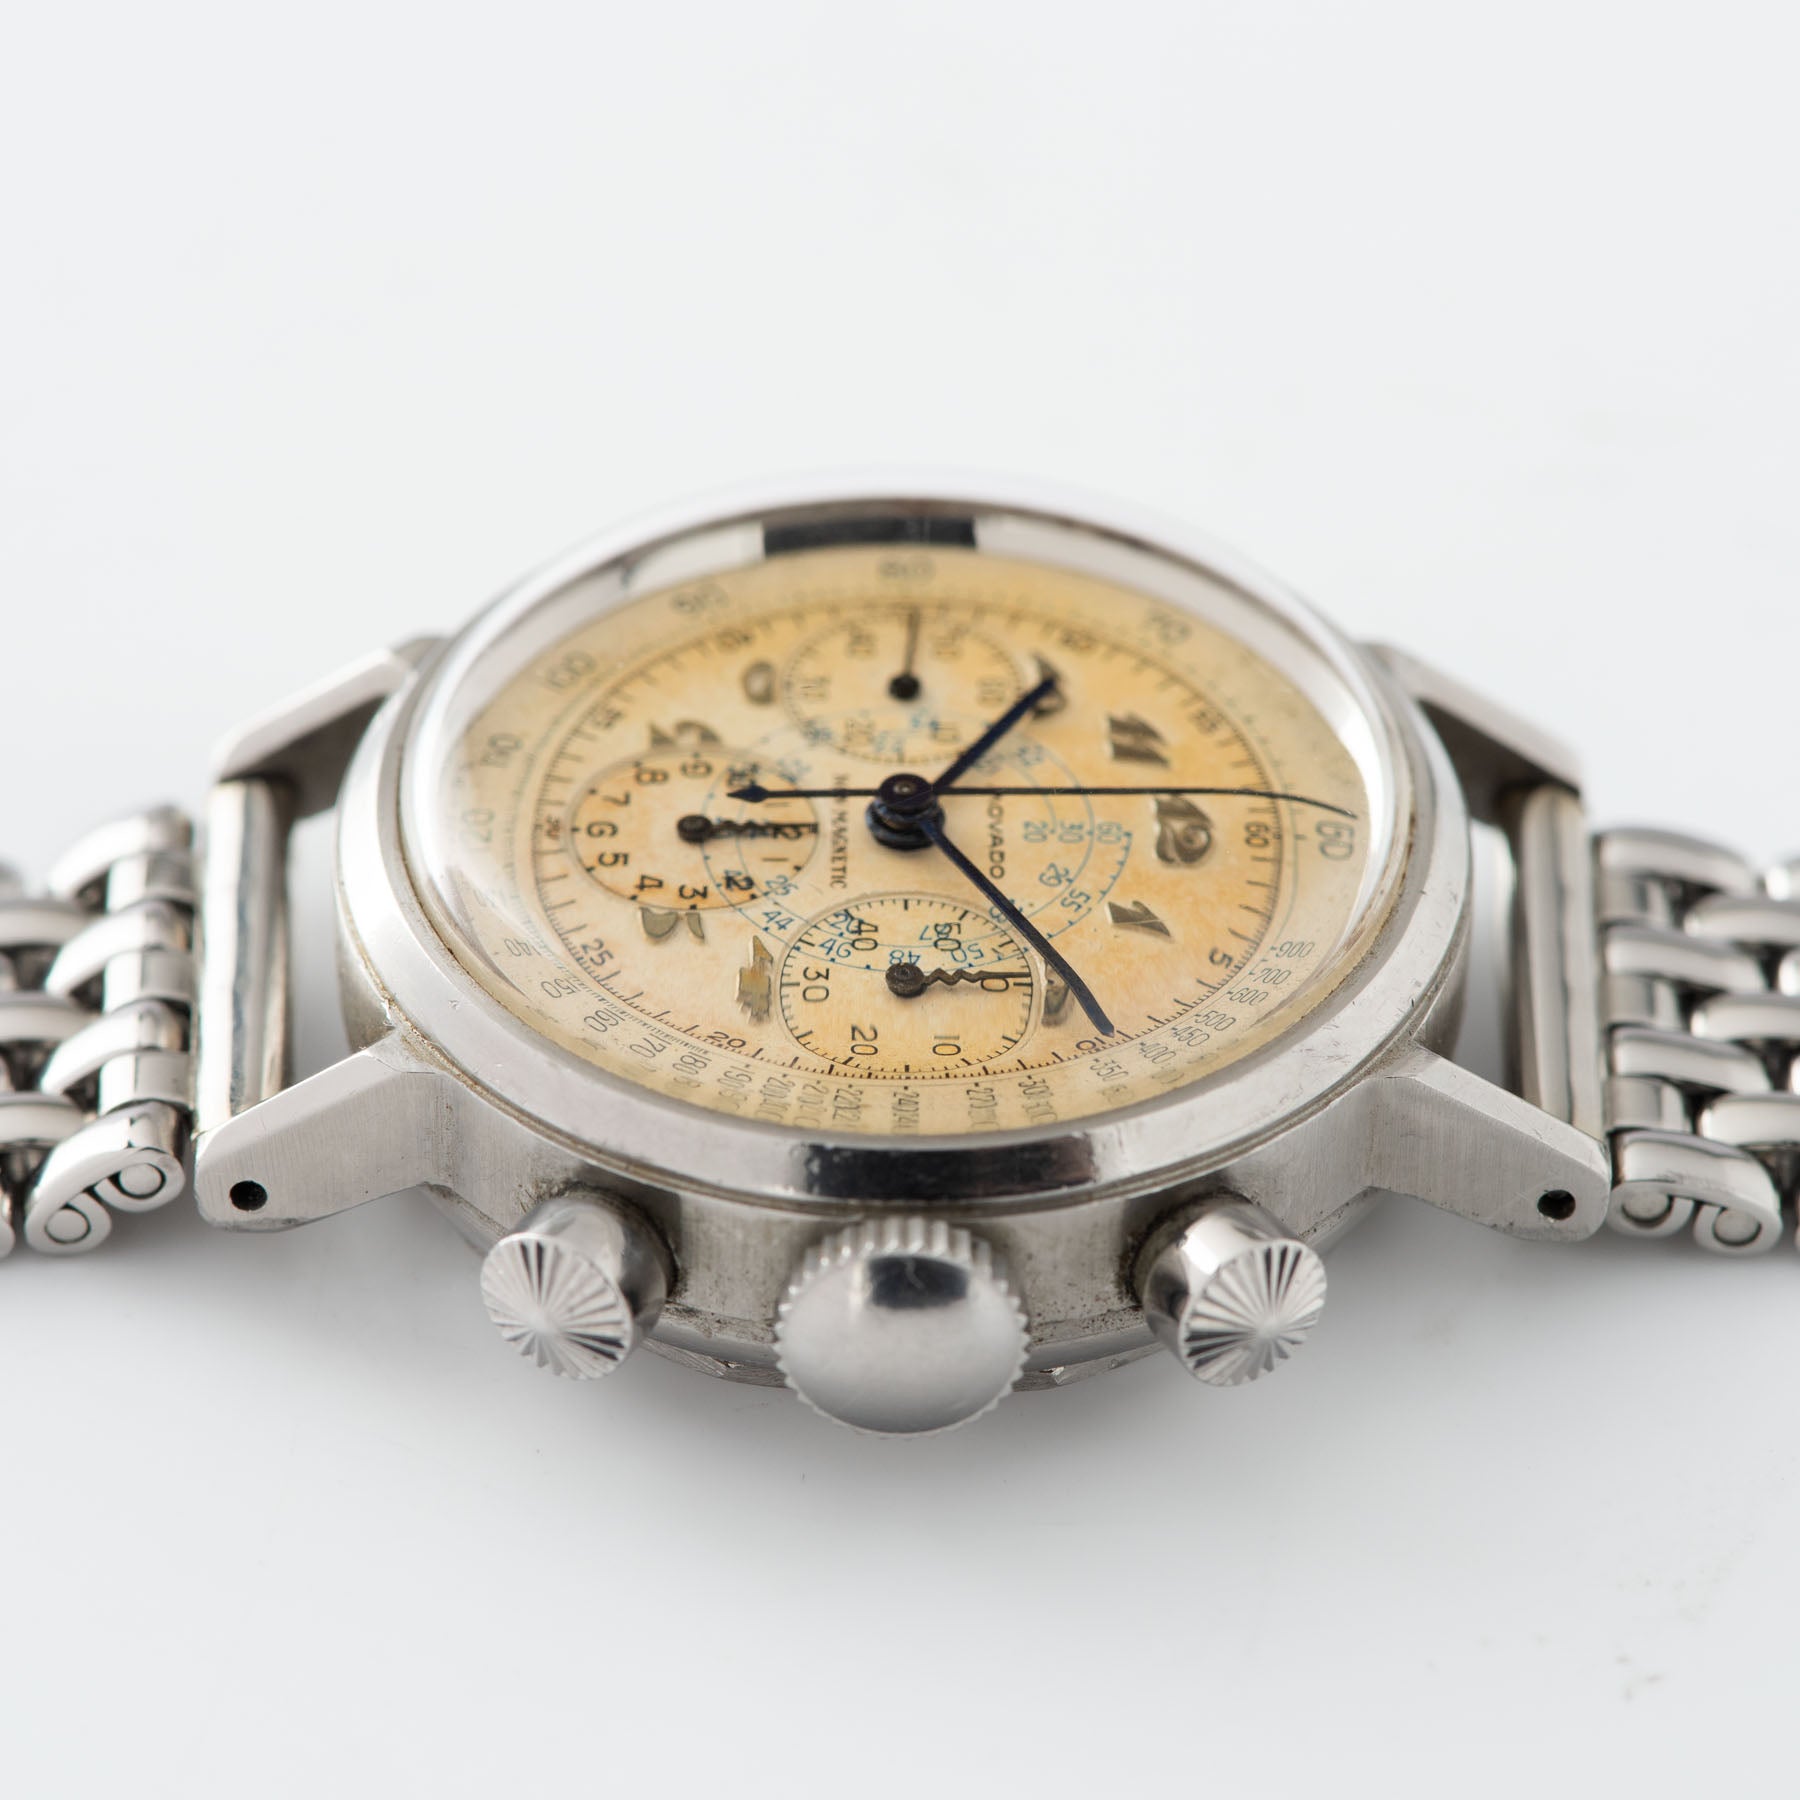 Movado M95 Steel FB Case Chronograph Watch with ‘tasti tondi’ sunray pushers